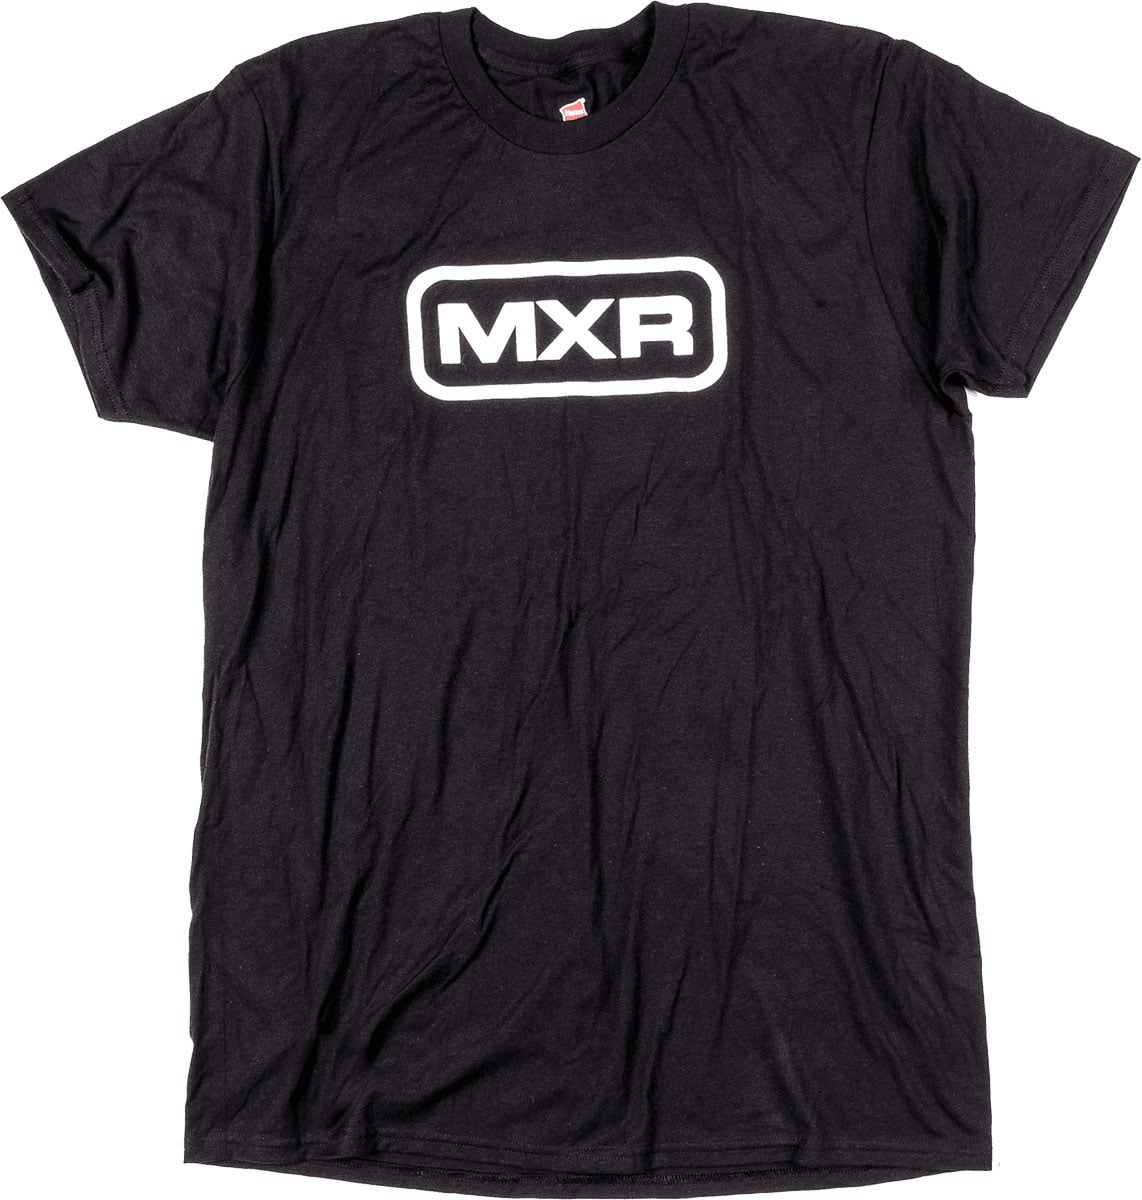 MXR T-SHIRT LOGO MXR VINTAGE X-LARGE